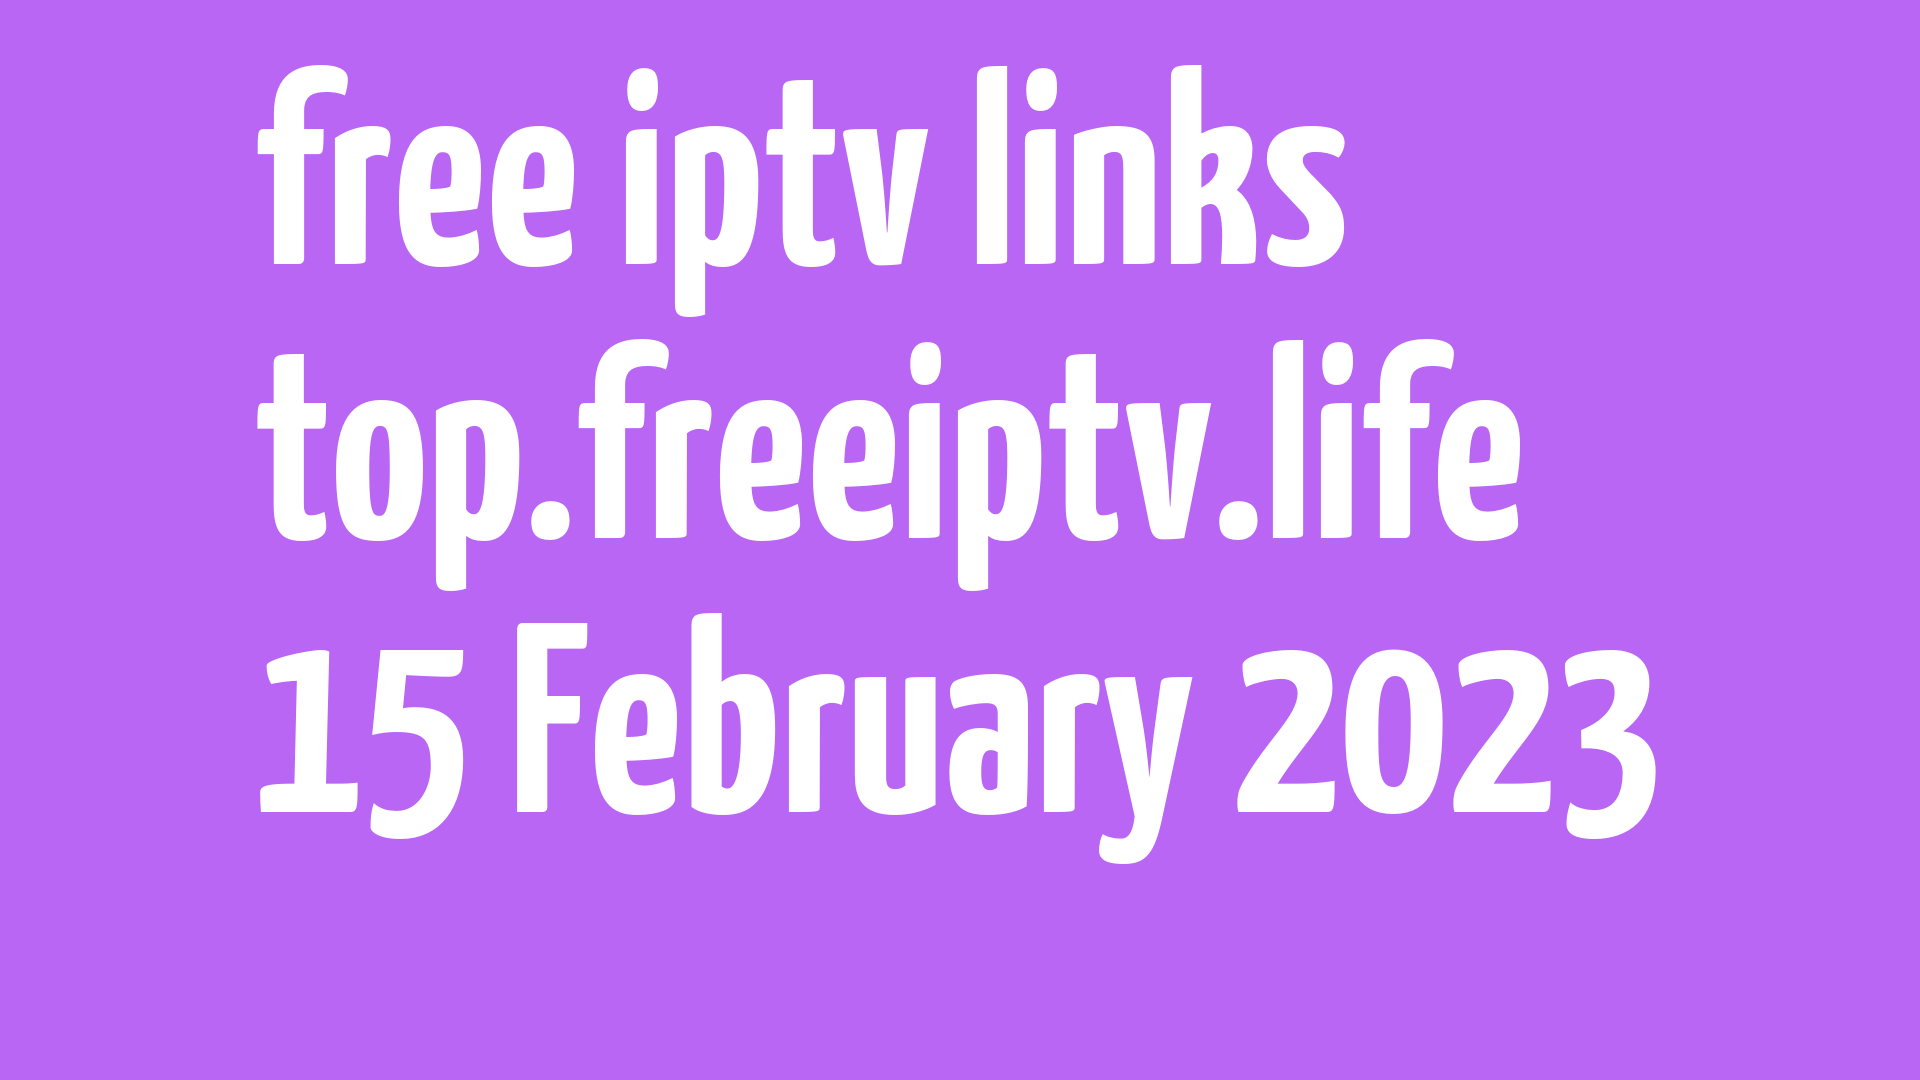 Code M3u Iptv 2023 FREE IPTV LINKS DAILY M3U PLAYLISTS 15 February 2023